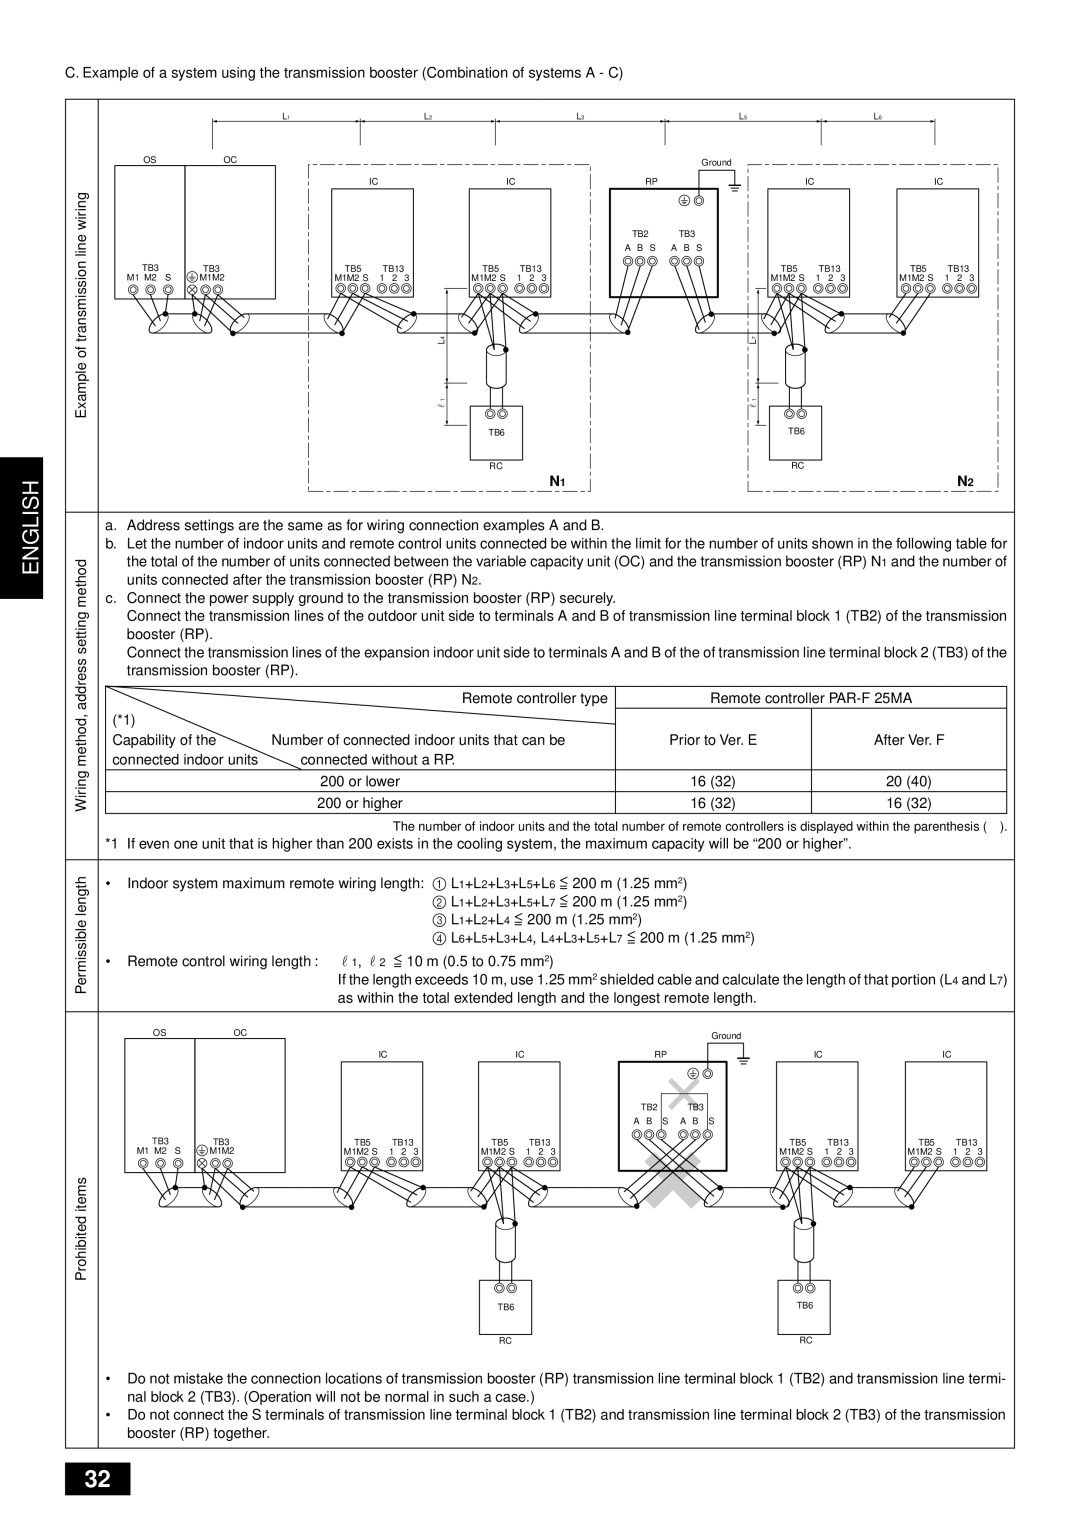 Mitsubishi Electronics PUHY-YMC installation manual English, r1, r2 